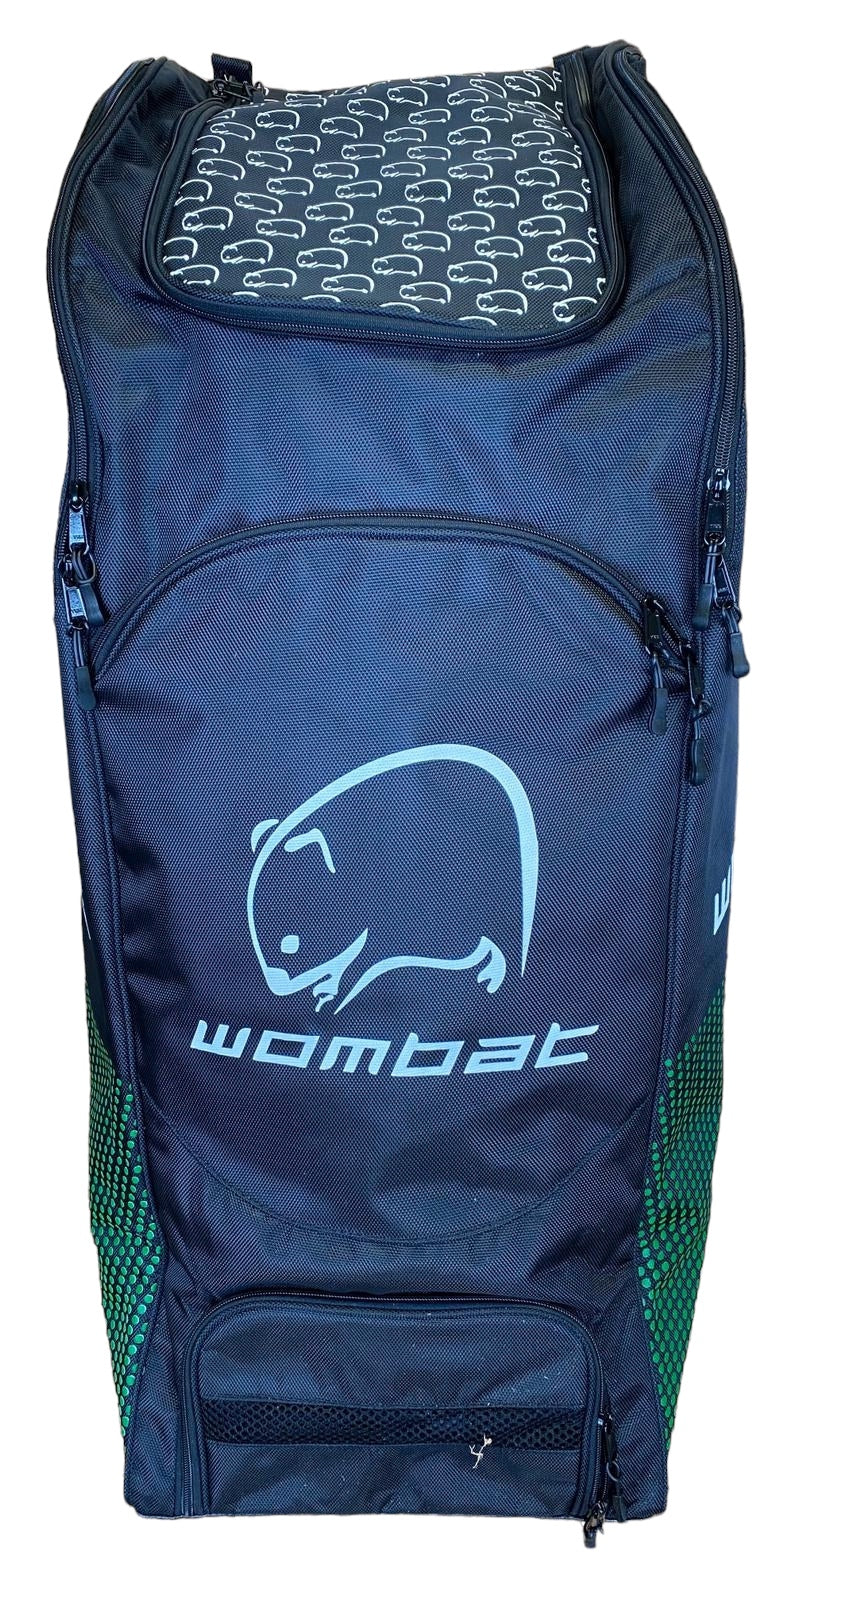 Wombat Pro Duffle Bag MK2 - The Cricket Store